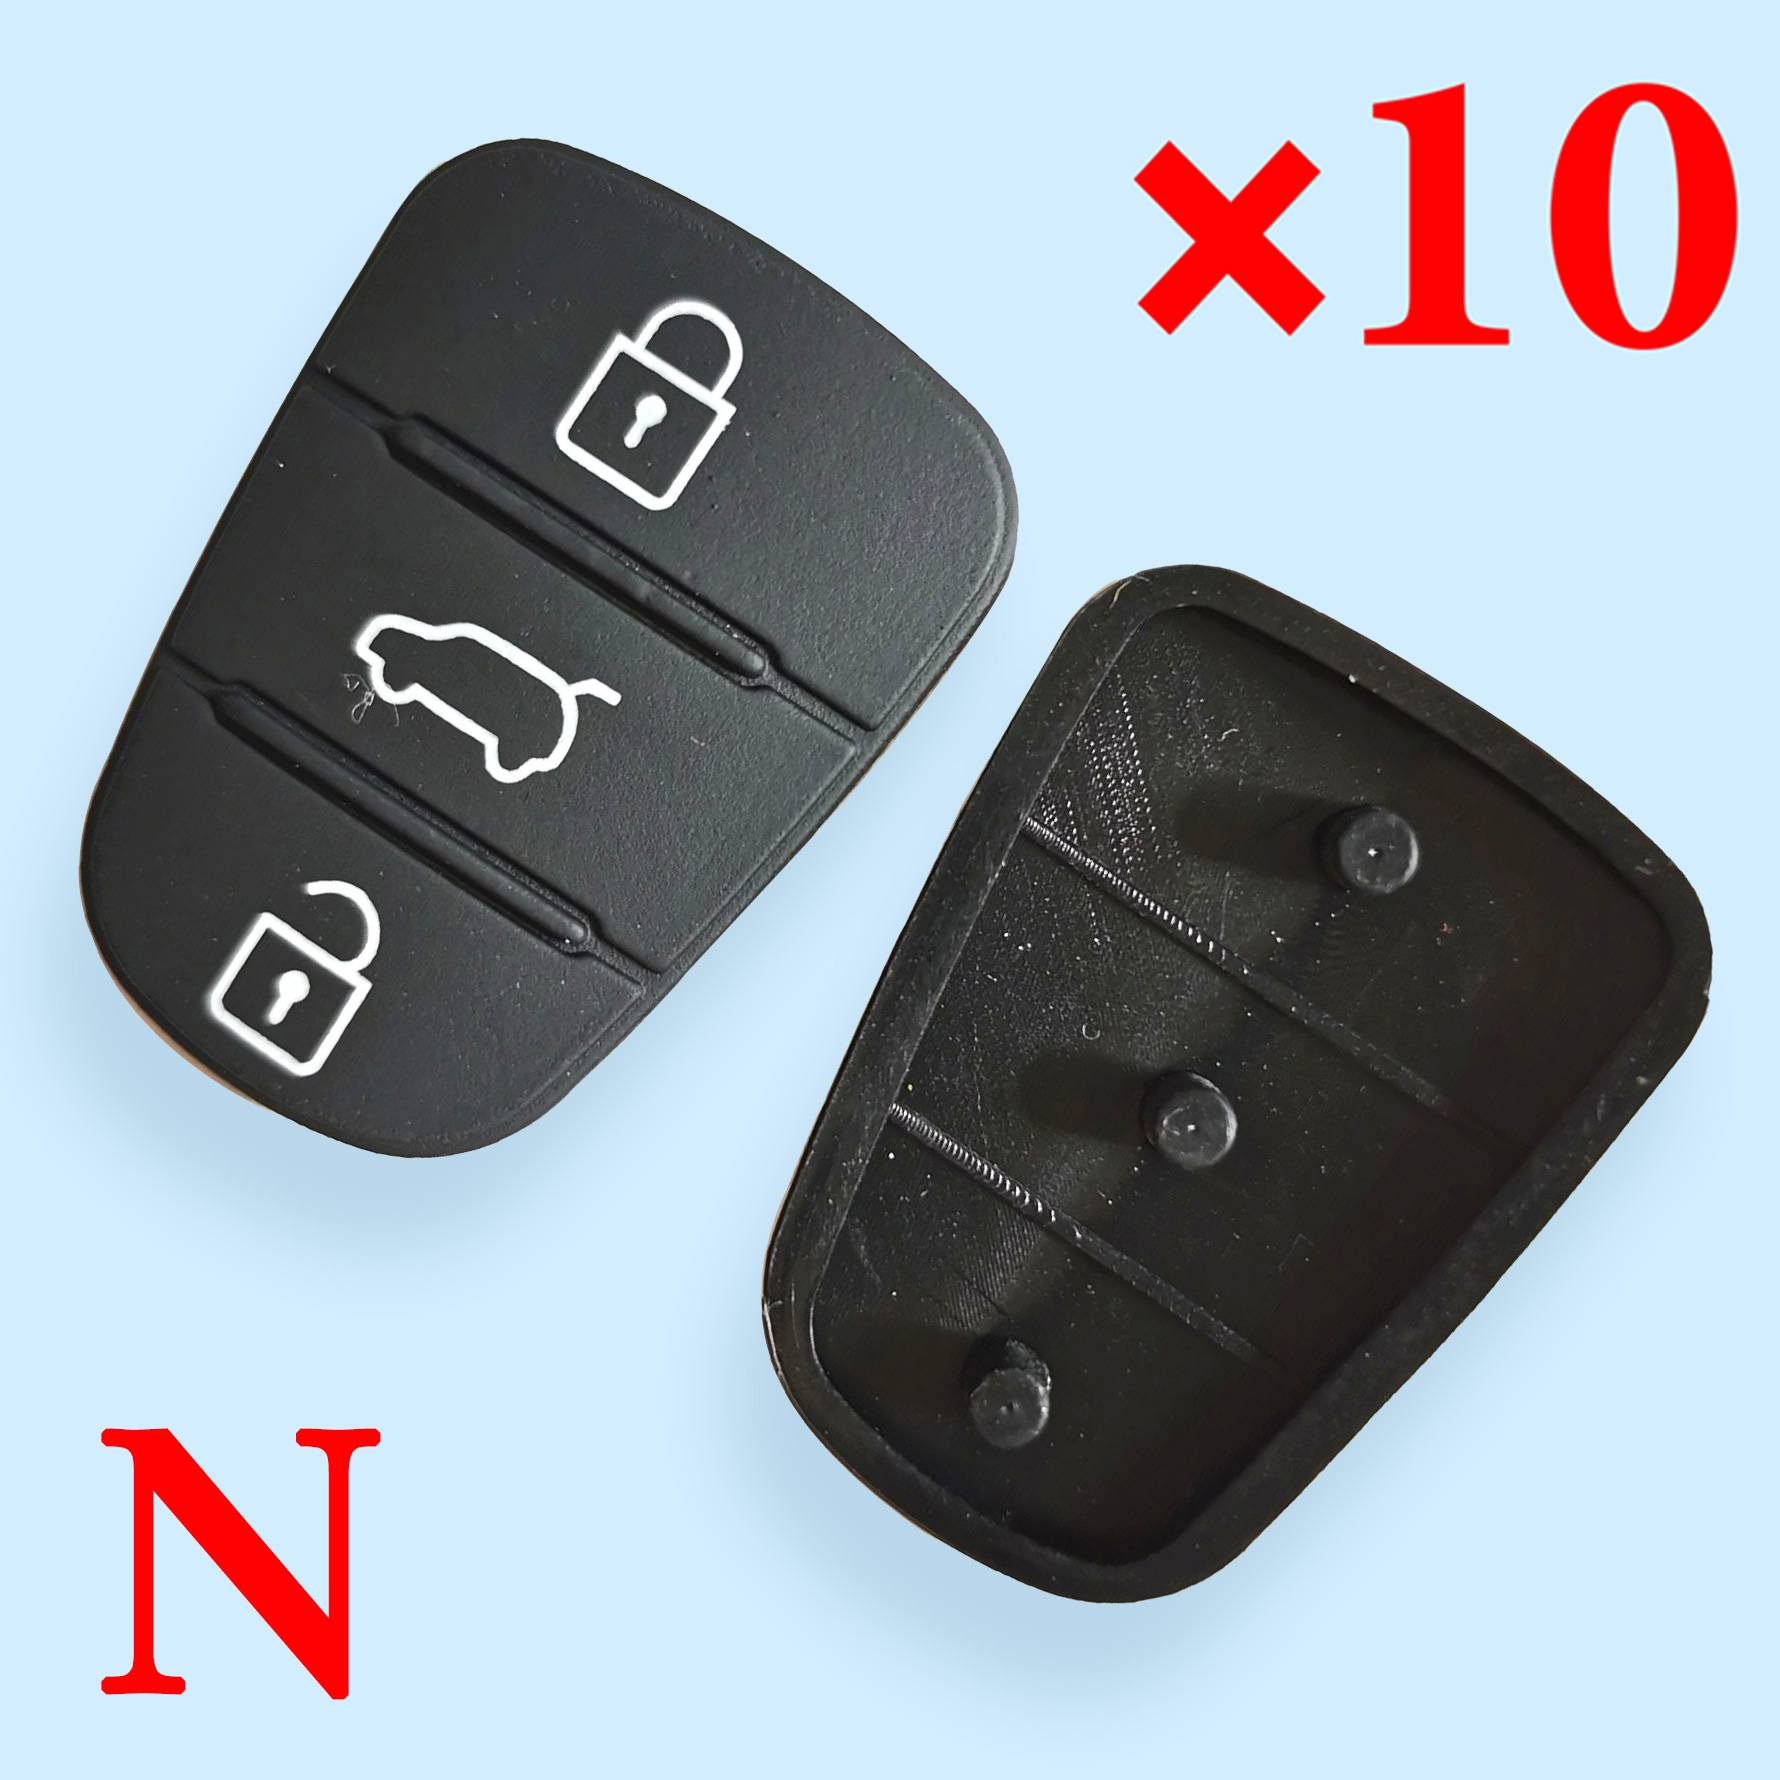 3 button Remote Keys Rubber Button Pad for Hyundai I30 10 pcs